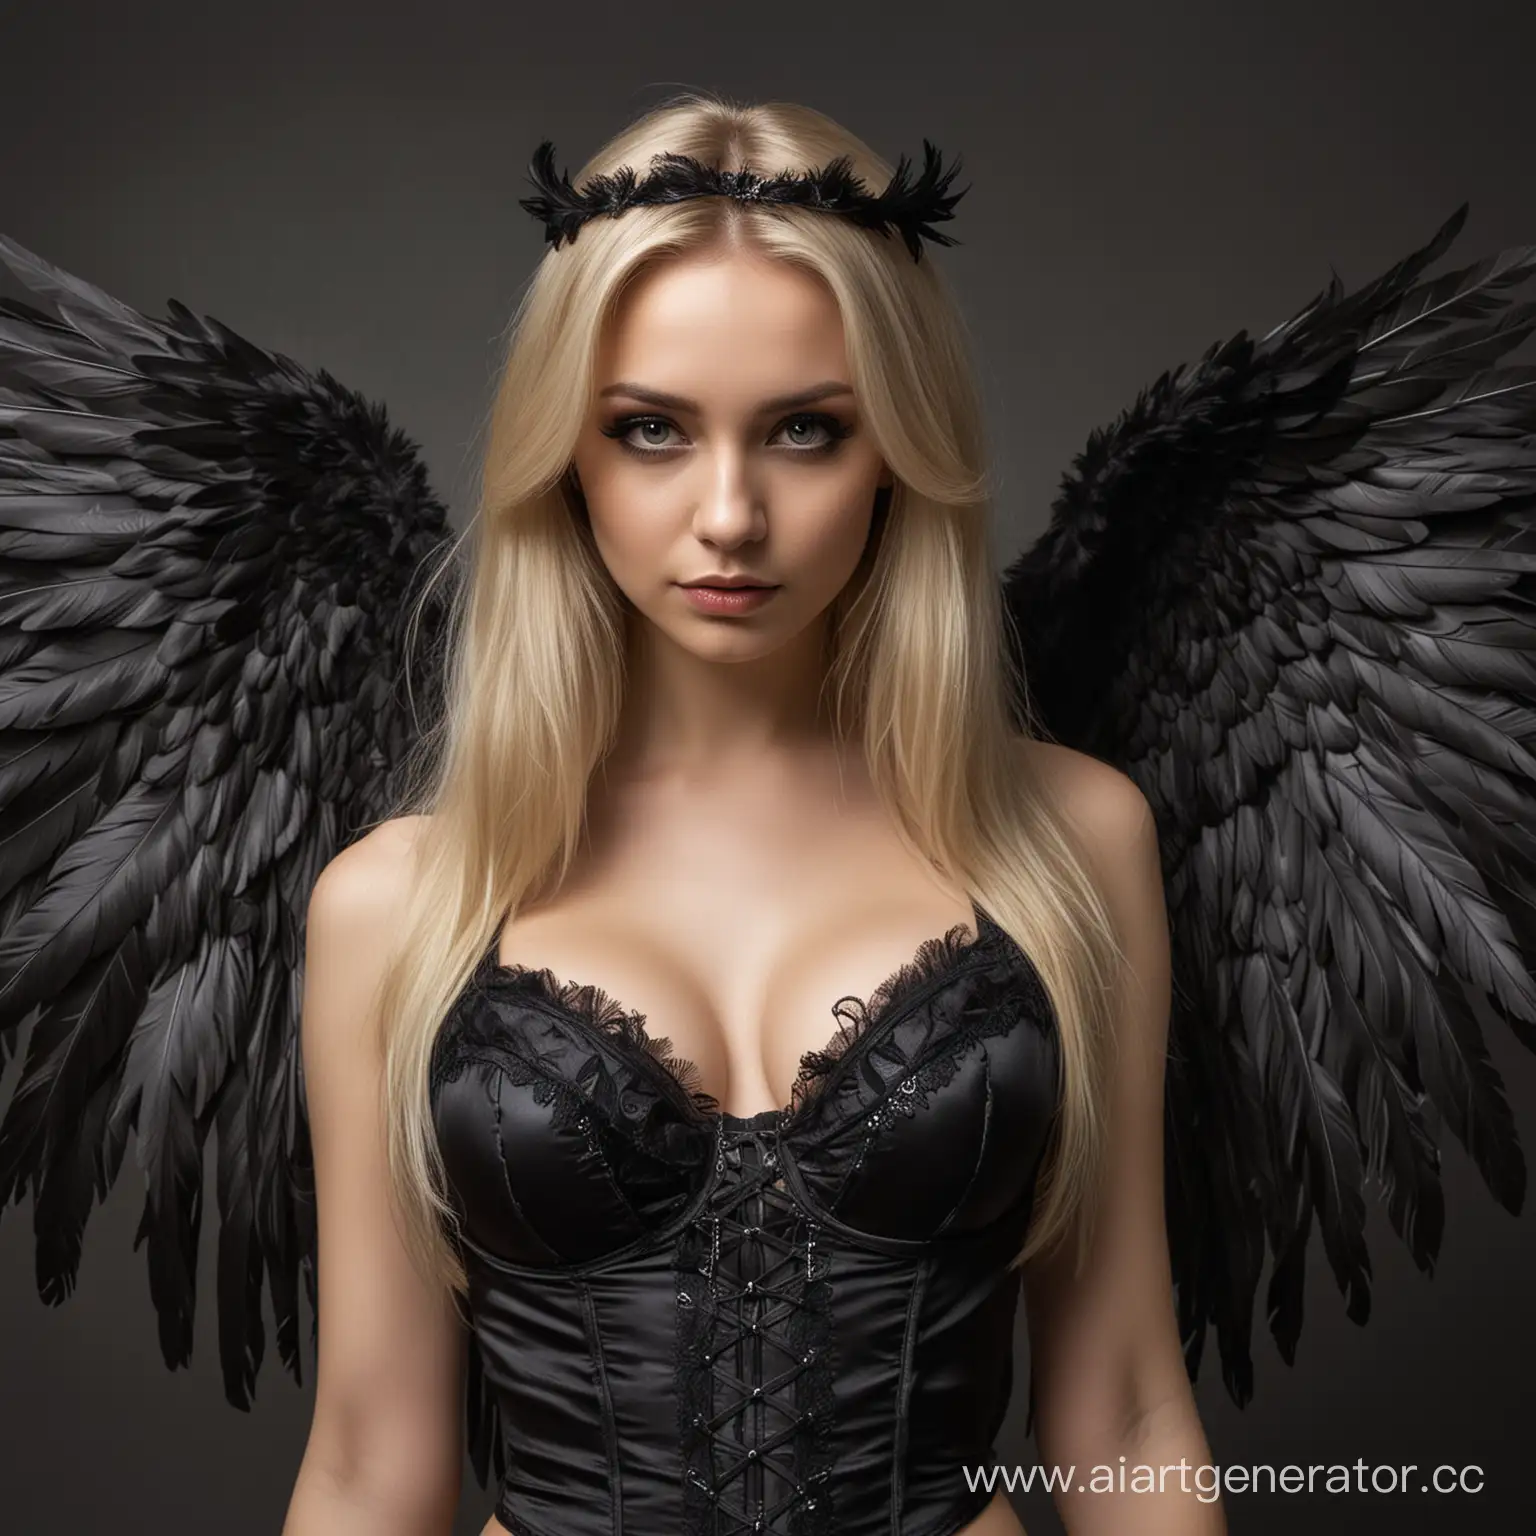 very beautiful gothic girl dressed as dark angel, nimb, feathers angel wings, pretty face, long blonde hair, black silky lingerie, hyperrealism